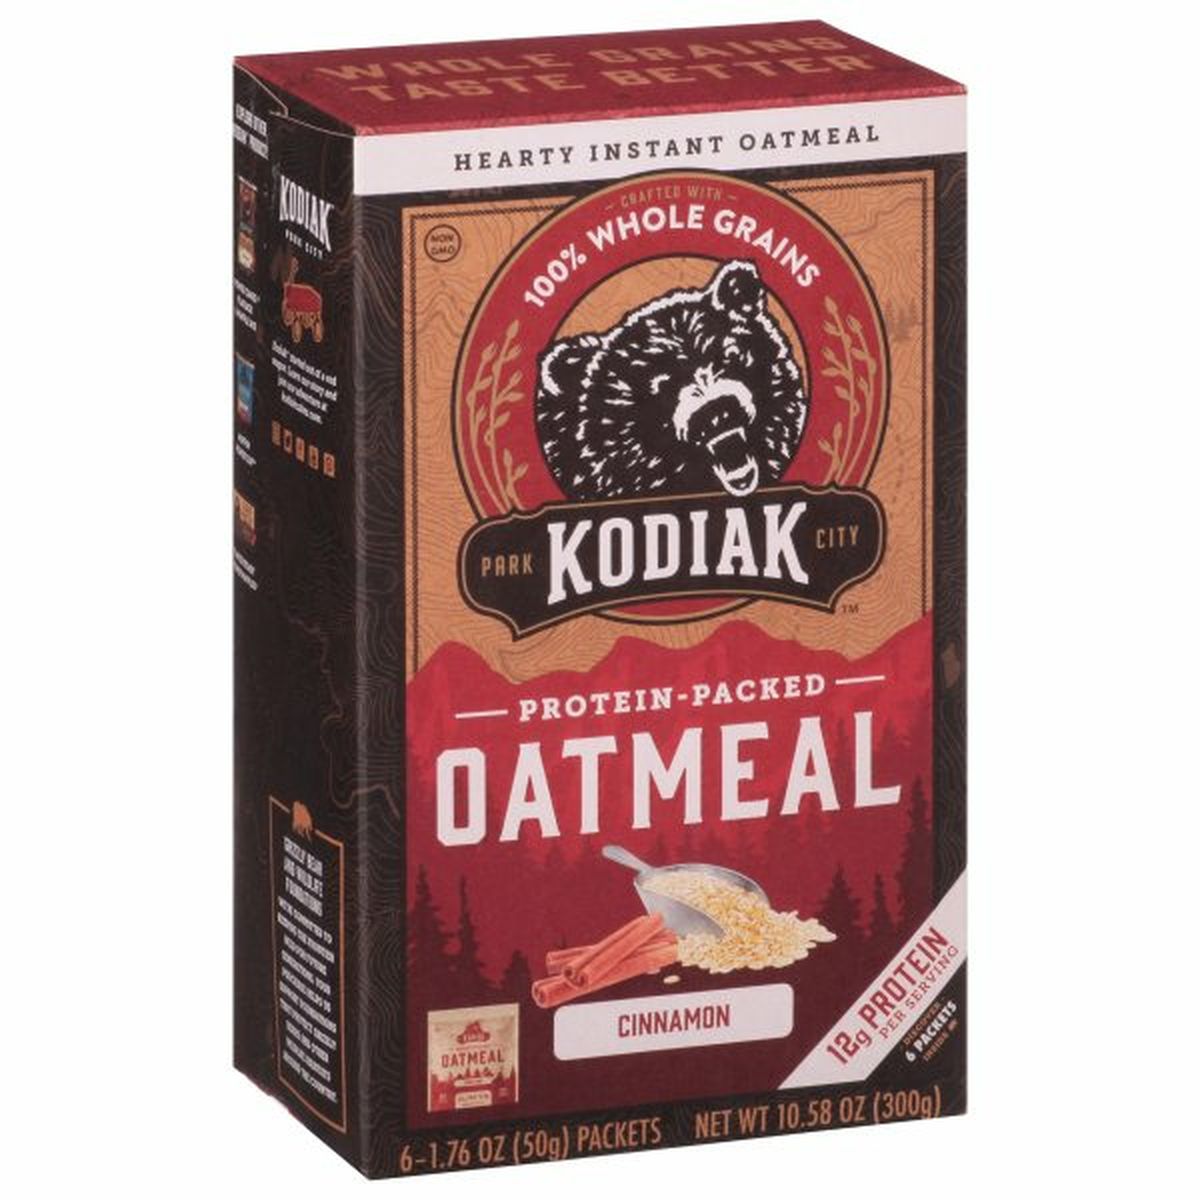 Calories in Kodiak Oatmeal, Cinnamon, Protein-Packed